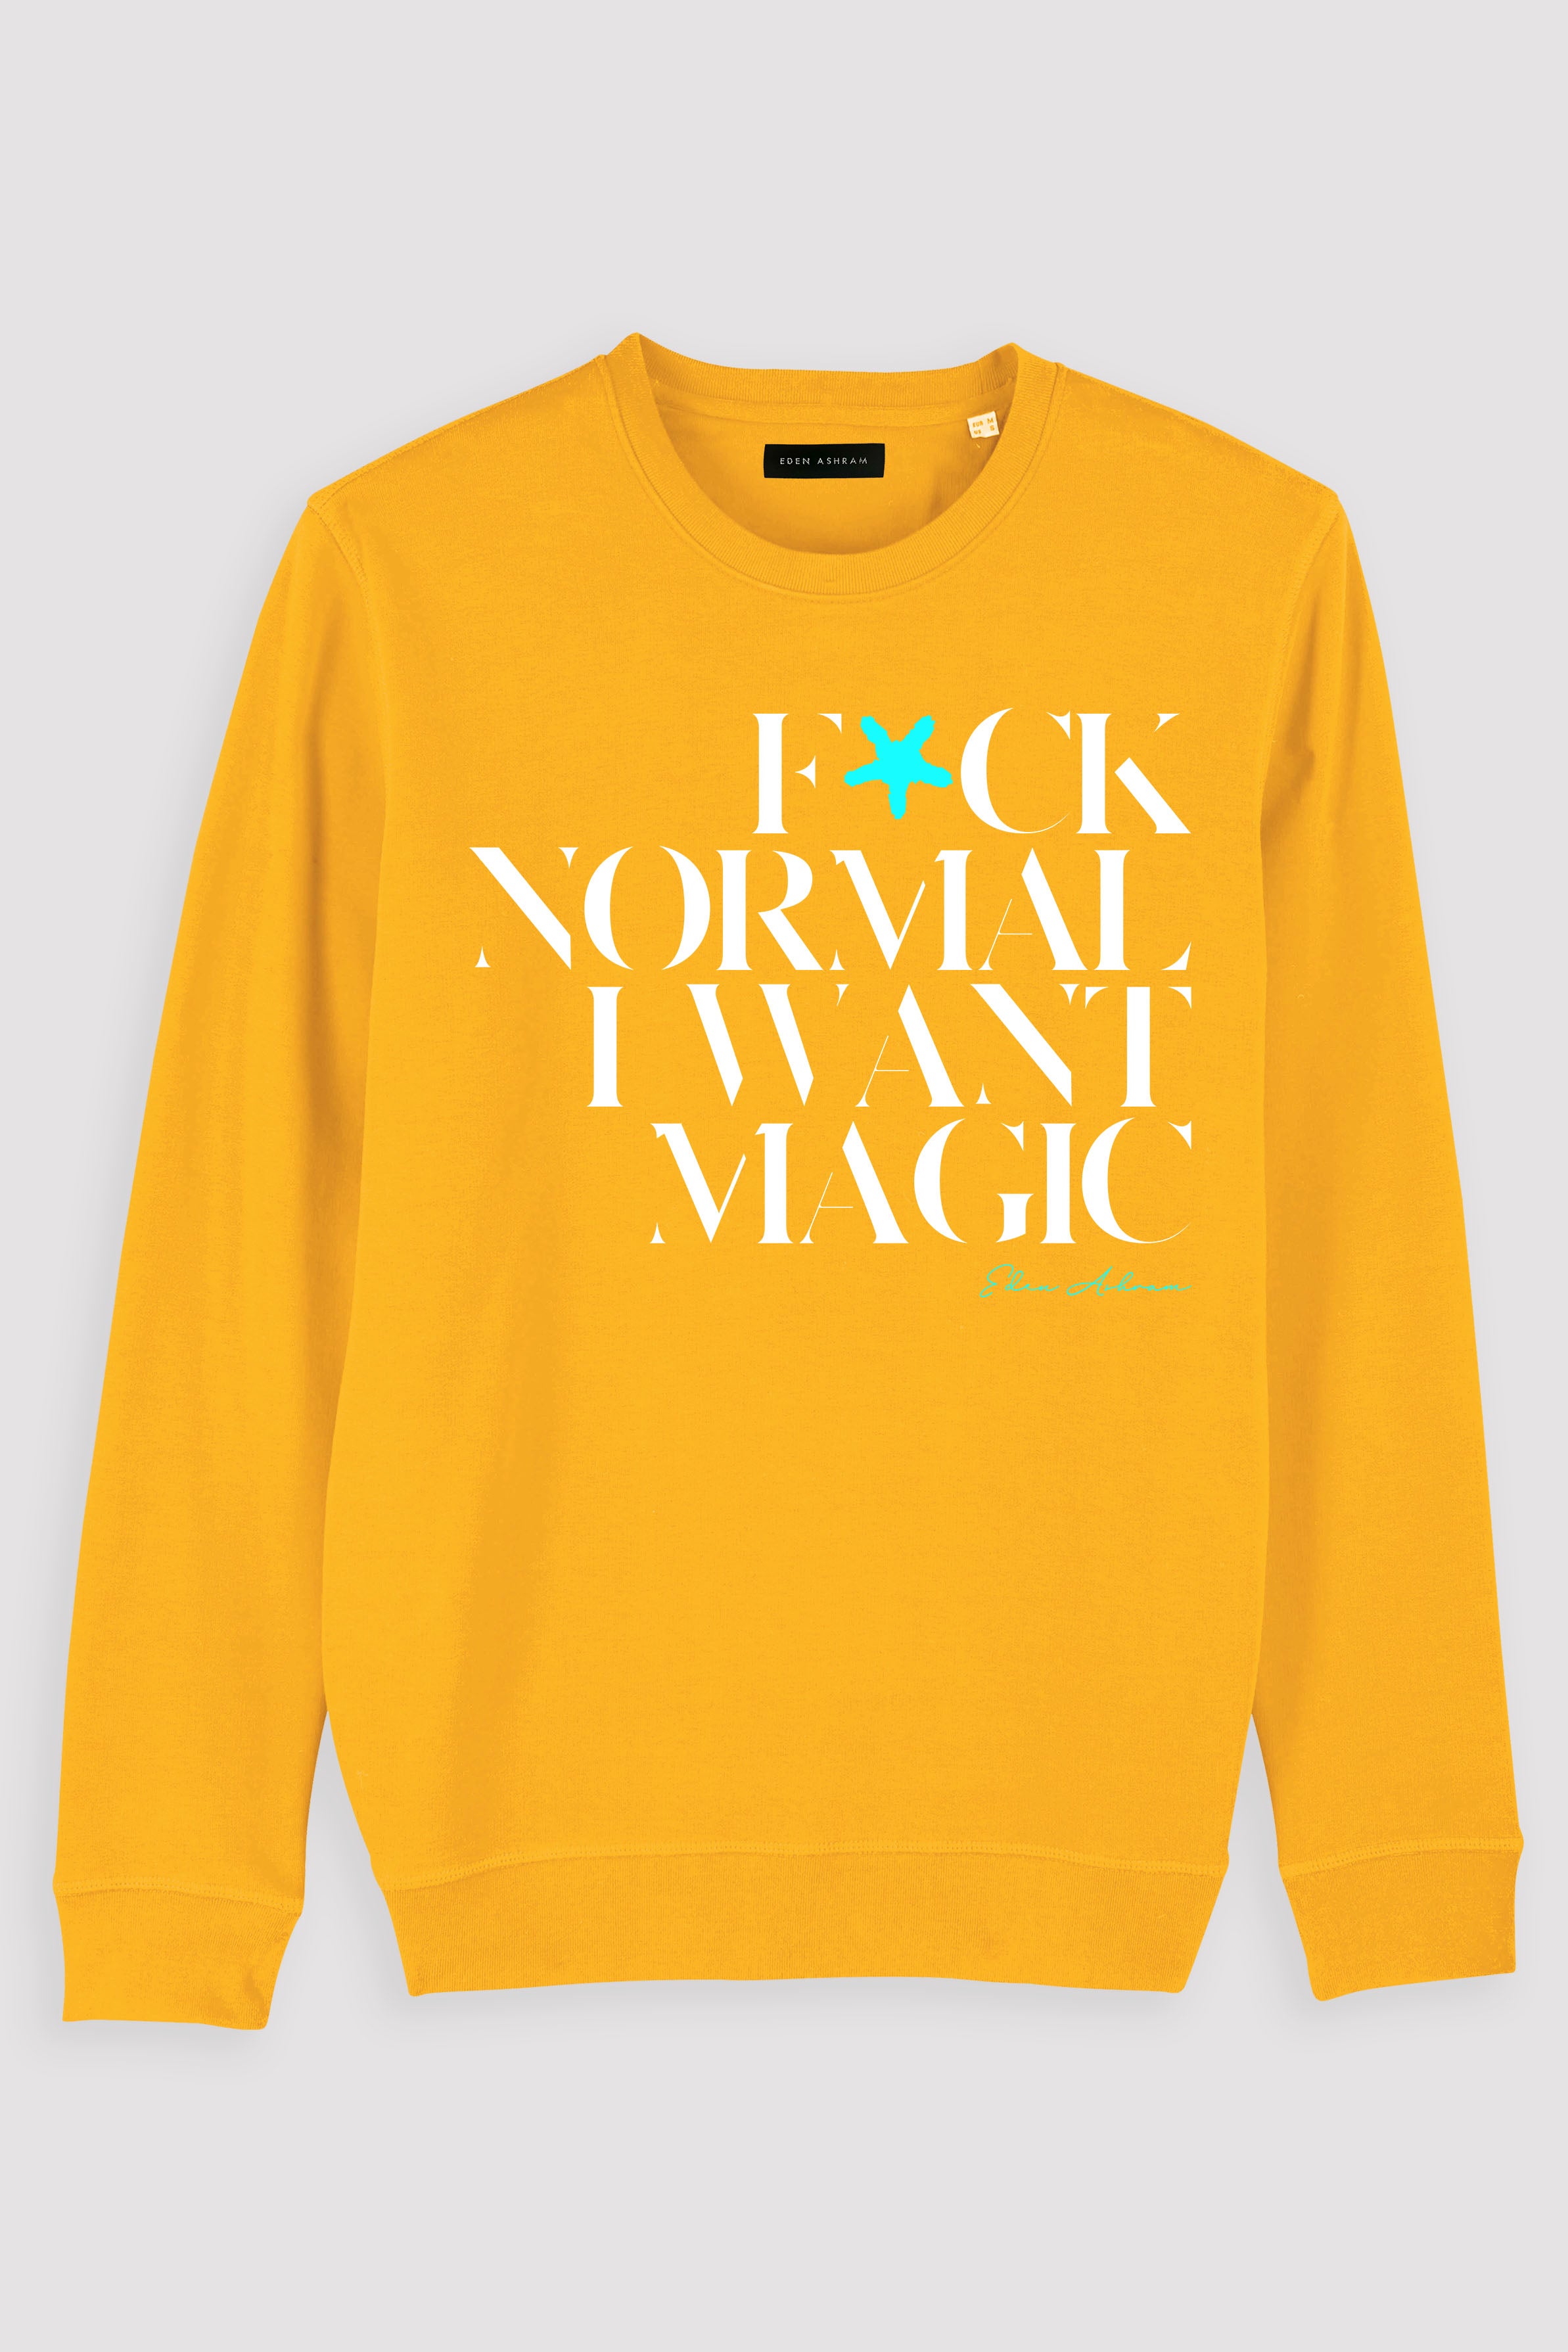 EDEN ASHRAM F*ck Normal I Want Magic Premium Crew Neck Sweatshirt Spectra Yellow